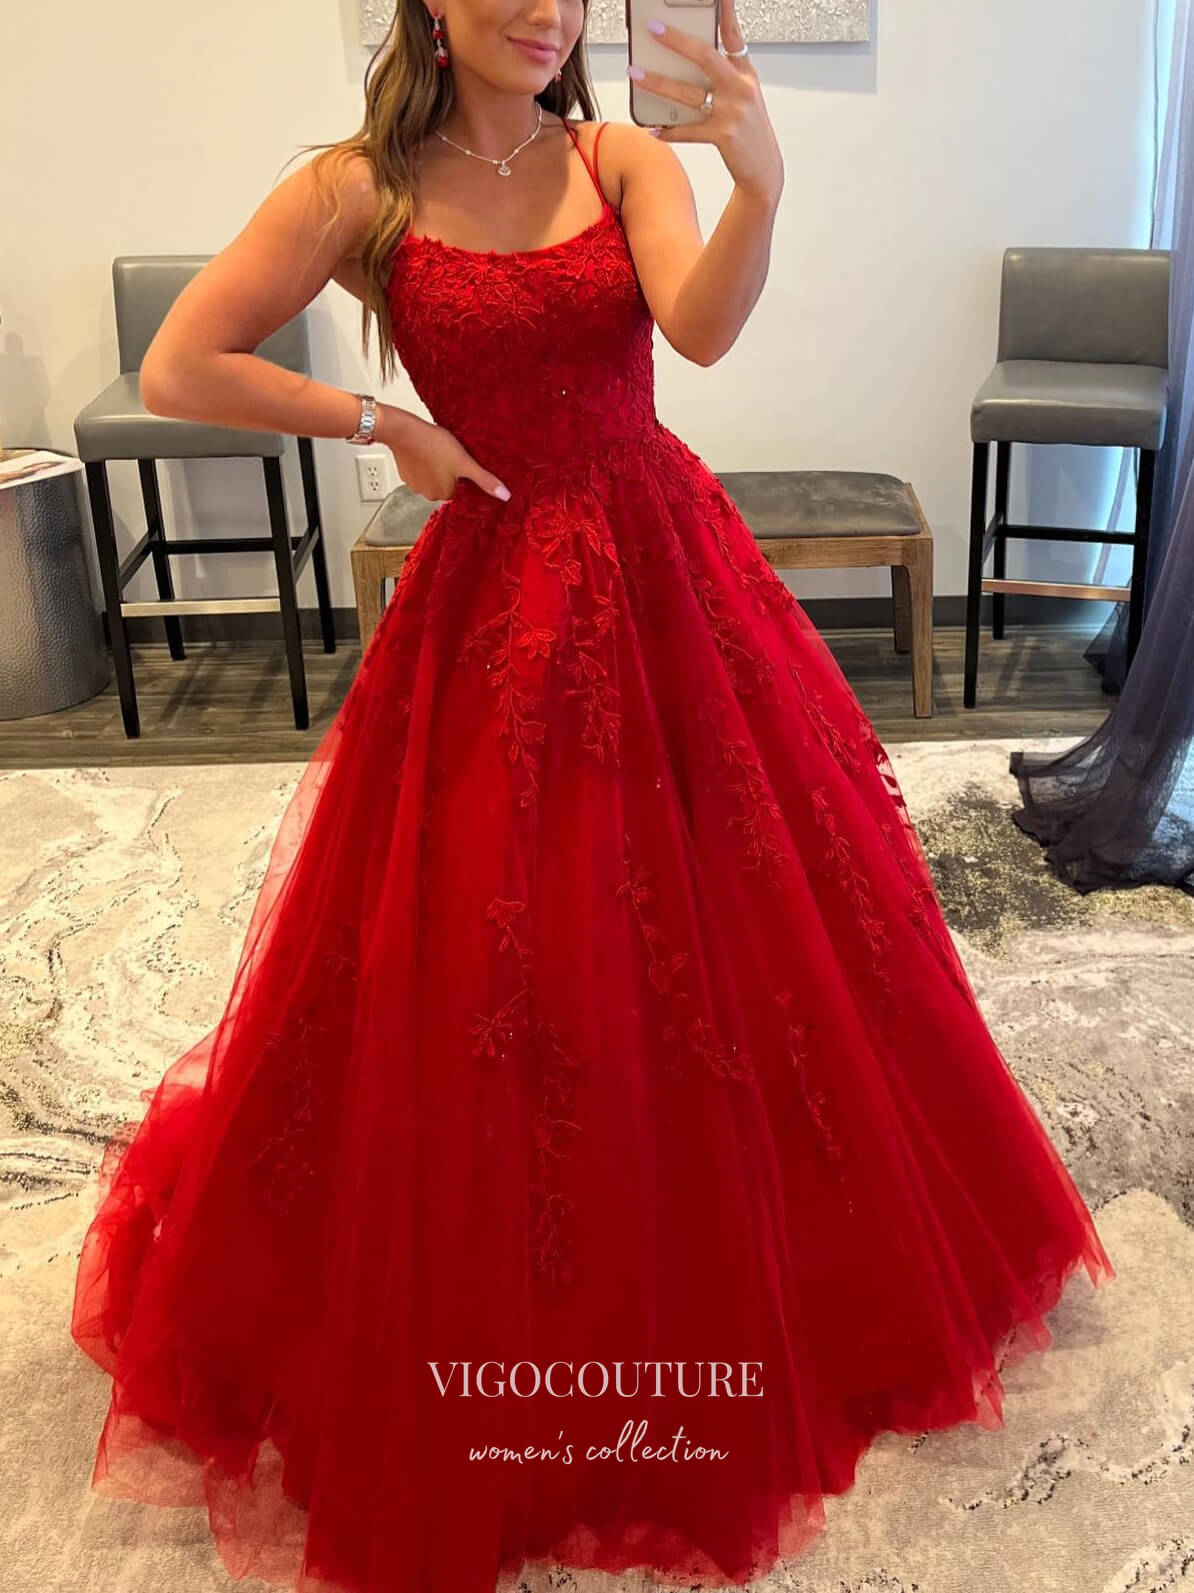 vigocouture-Lace Applique Prom Dresses A-Line Spaghetti Strap Formal Dresses 21557-Prom Dresses-vigocouture-Red-US2-